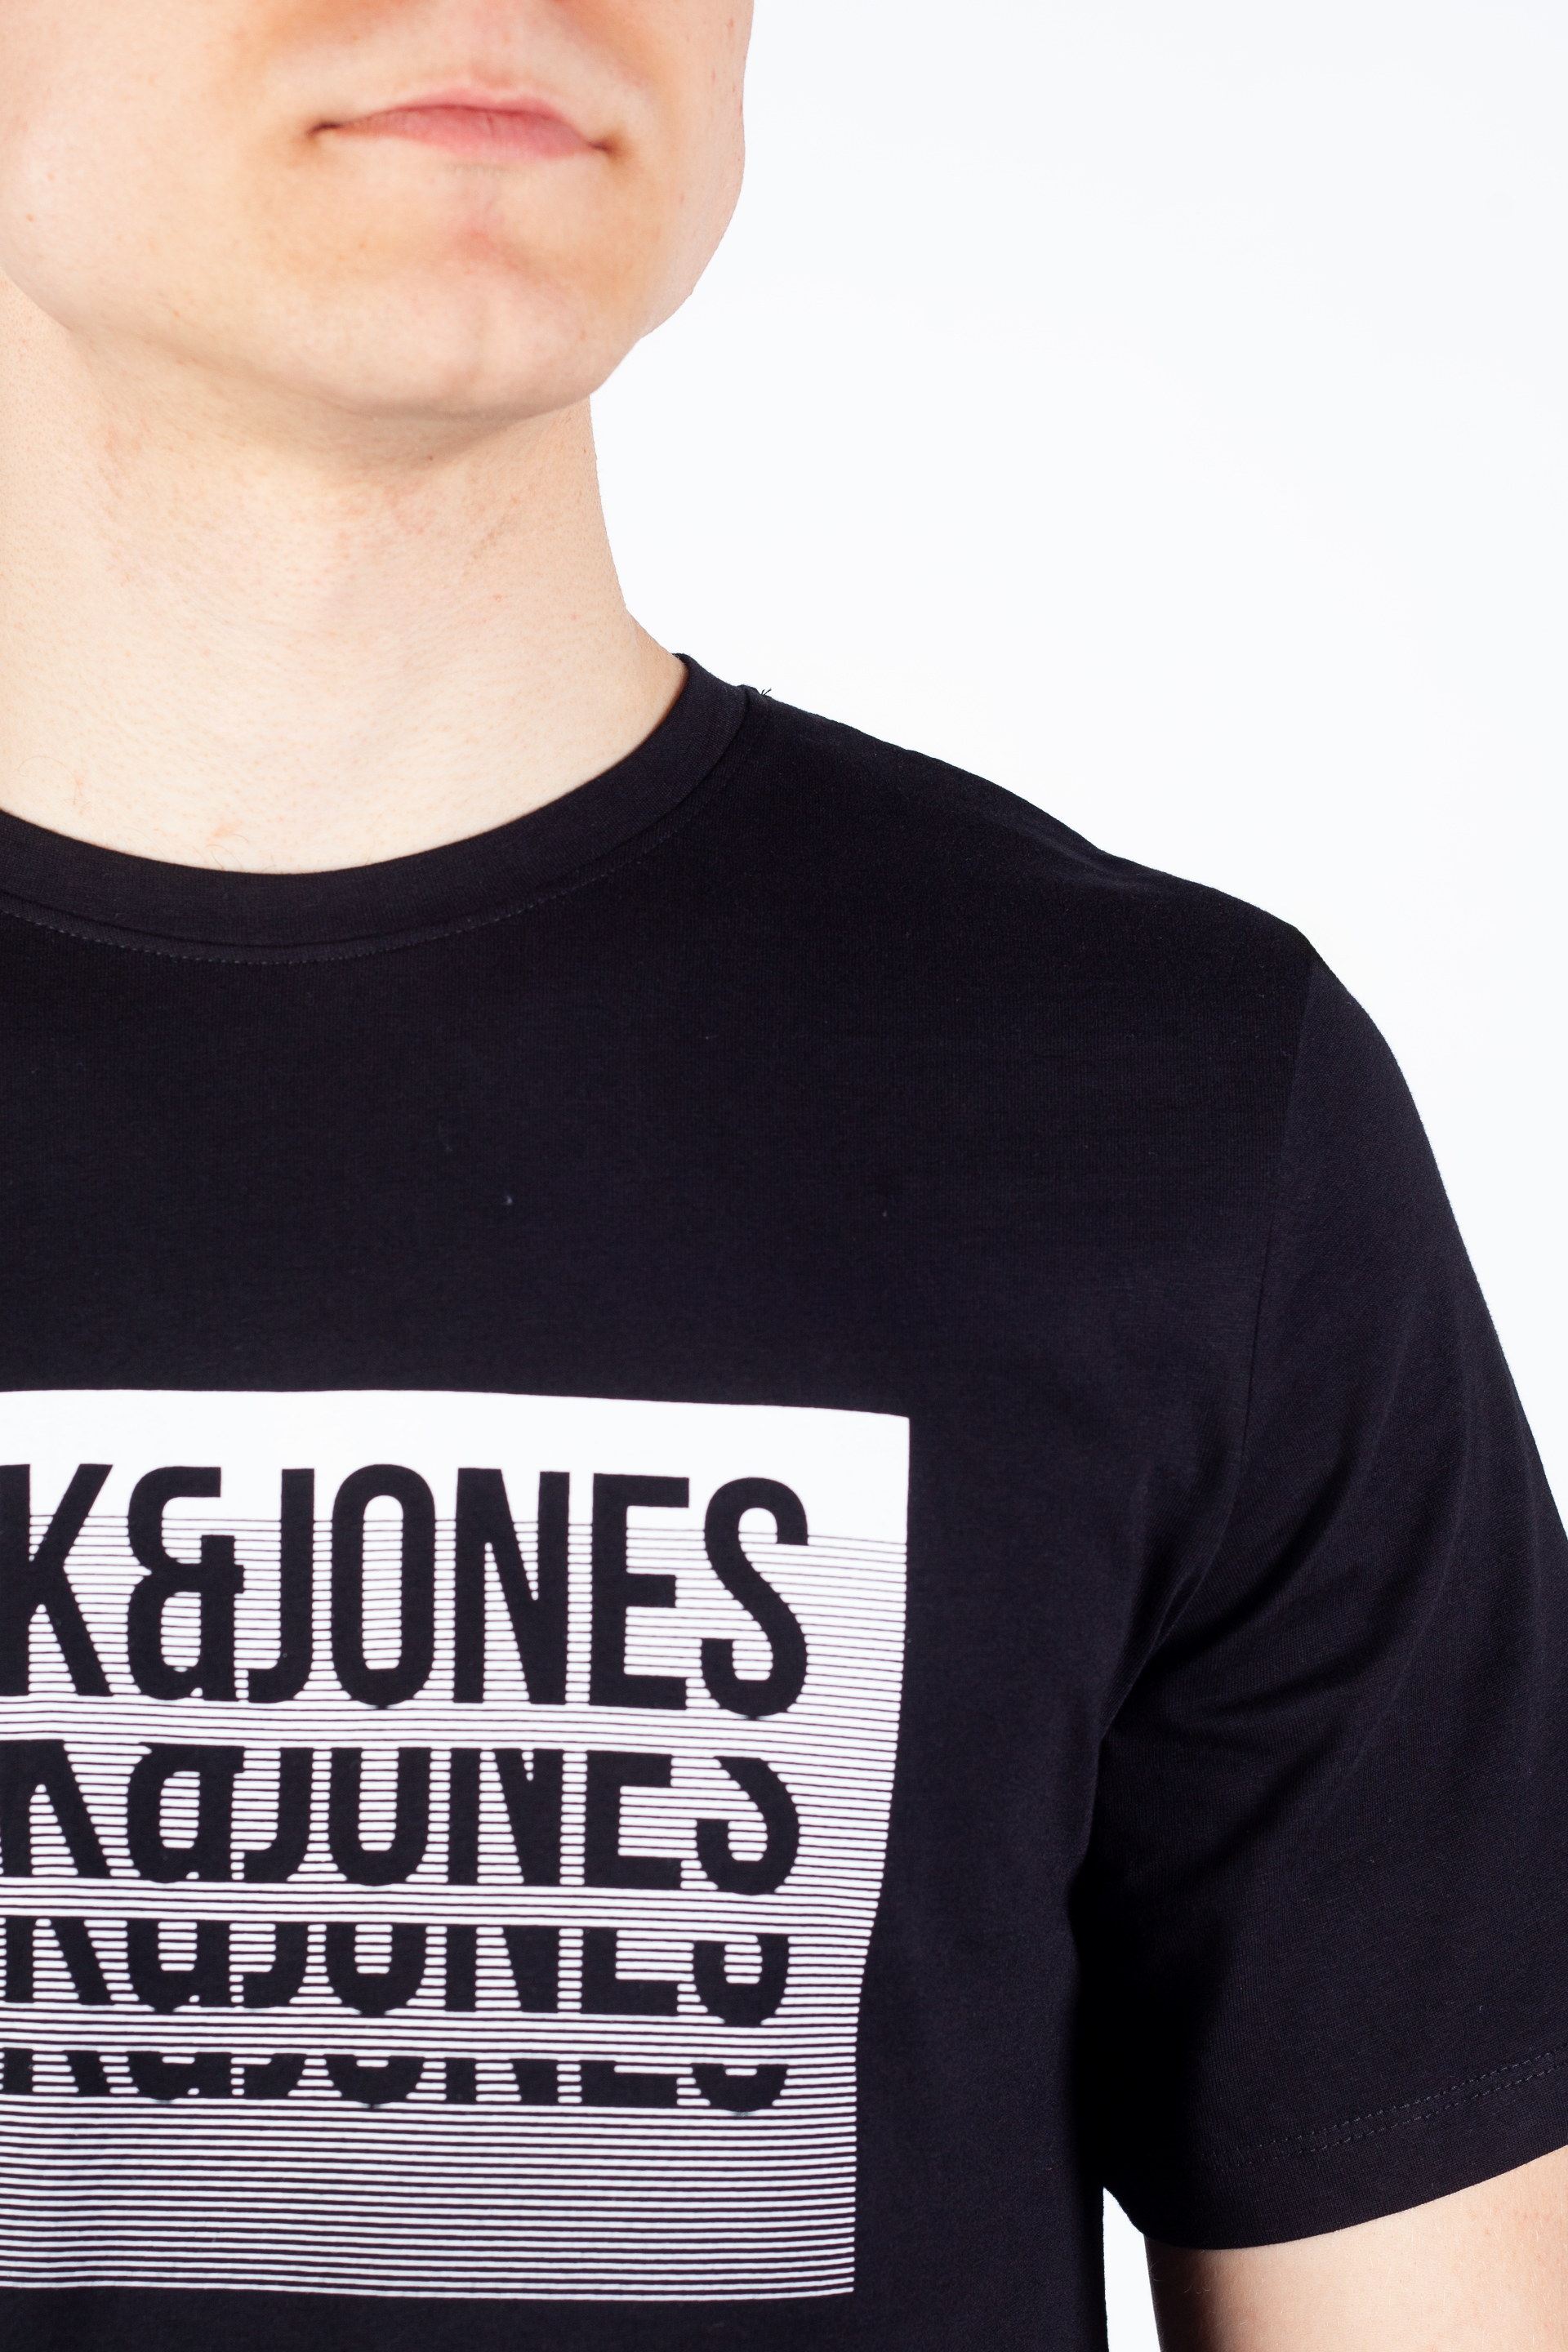 T-krekls JACK & JONES 12248614-Black